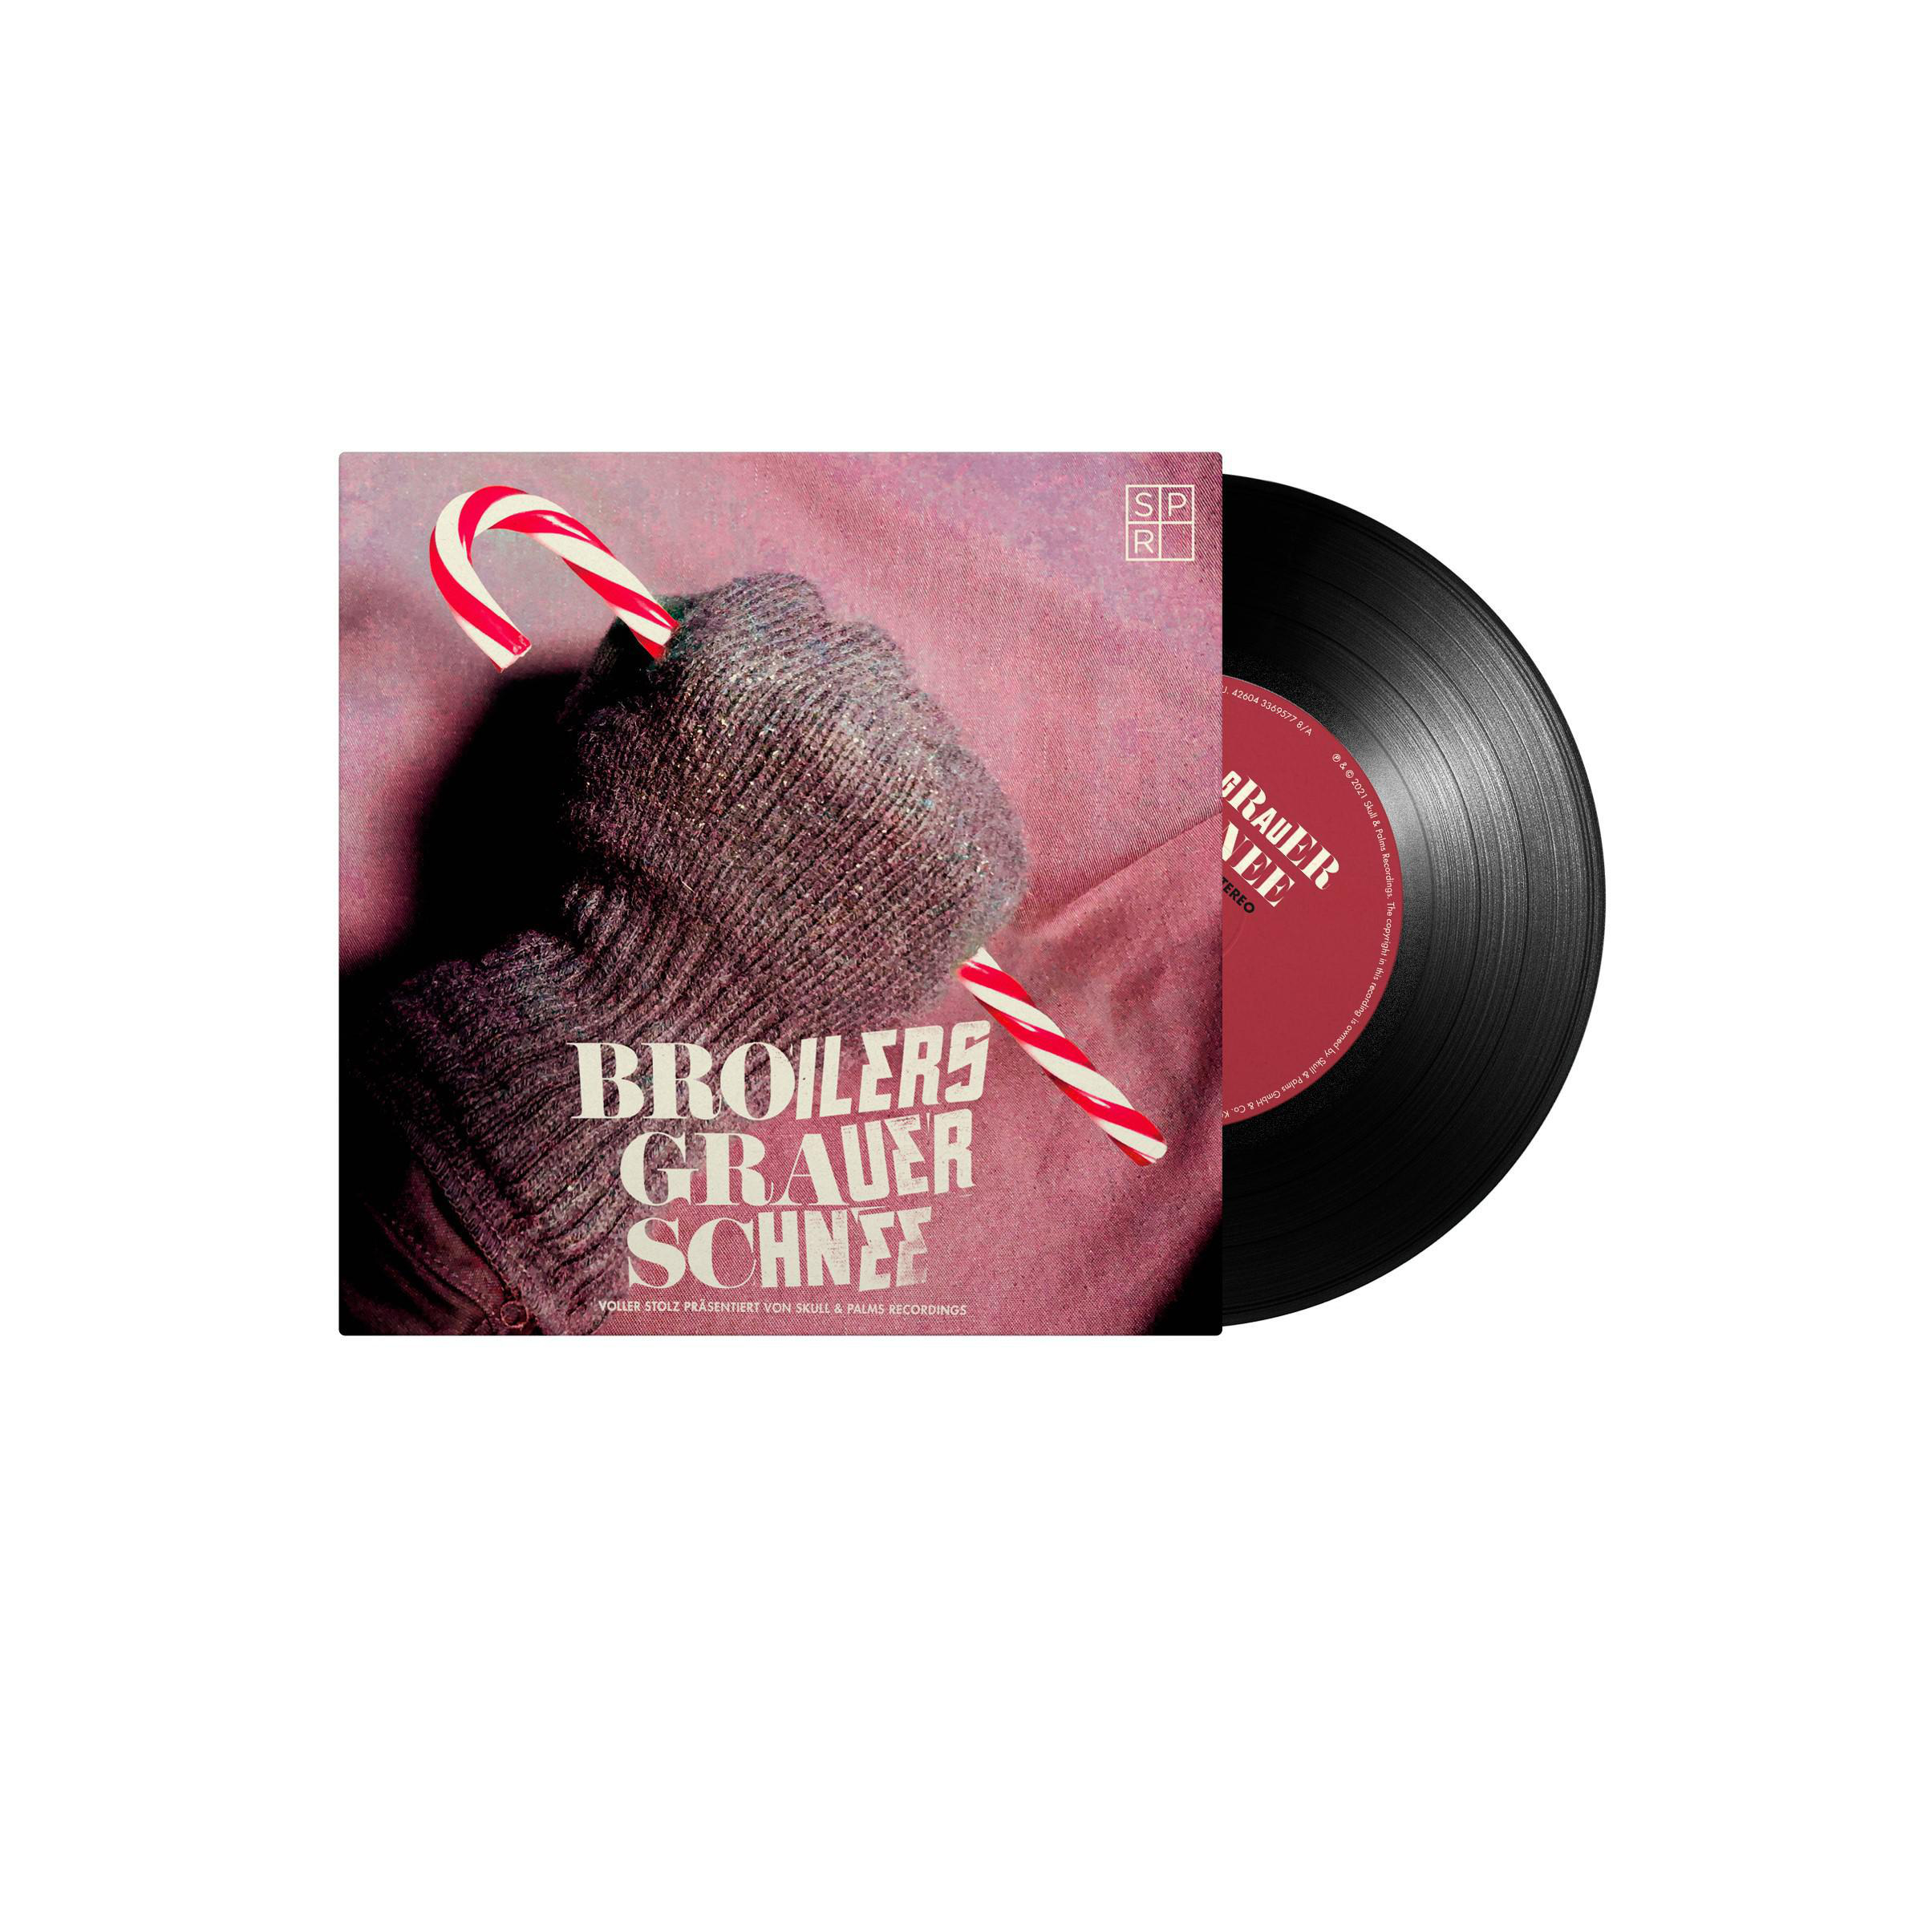 Broilers - Grauer - (limitiert And nummeriert) (Vinyl) Schnee